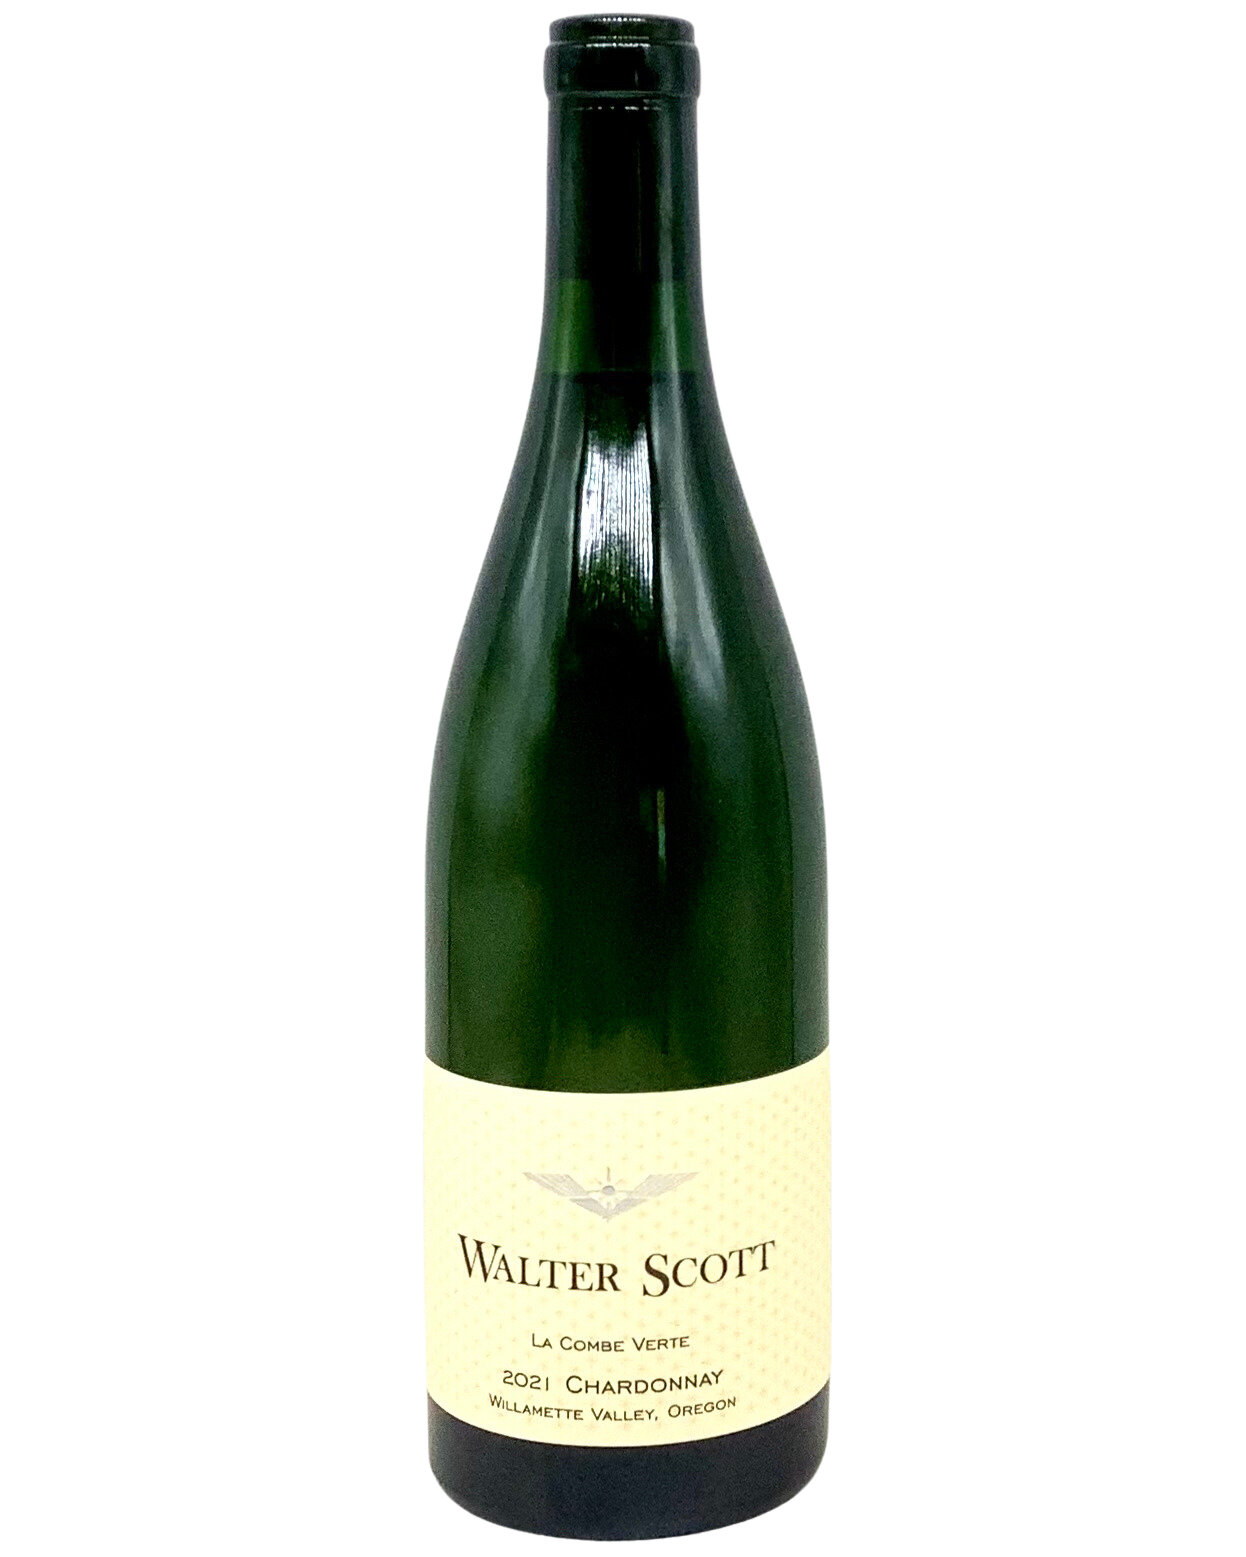 Walter Scott, Chardonnay "La Combe Verte" Willamette Valley, Oregon 2021 newarrival